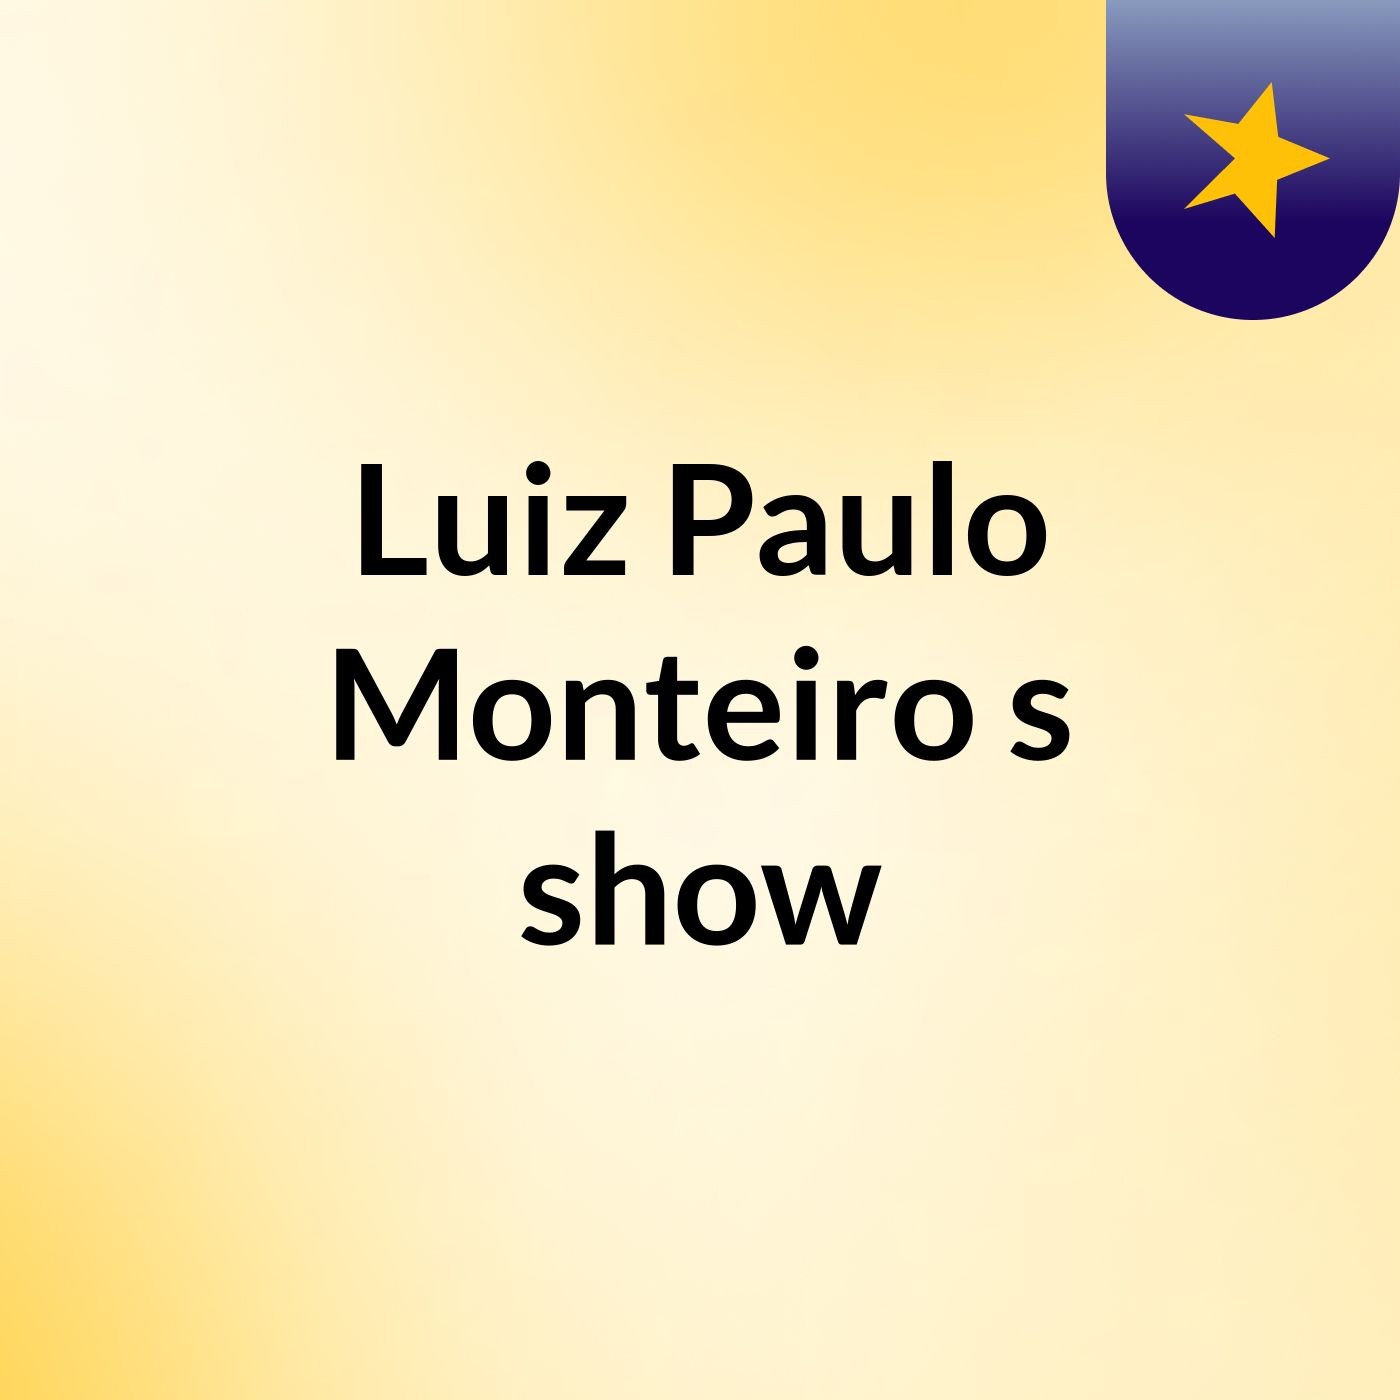 Luiz Paulo Monteiro's show